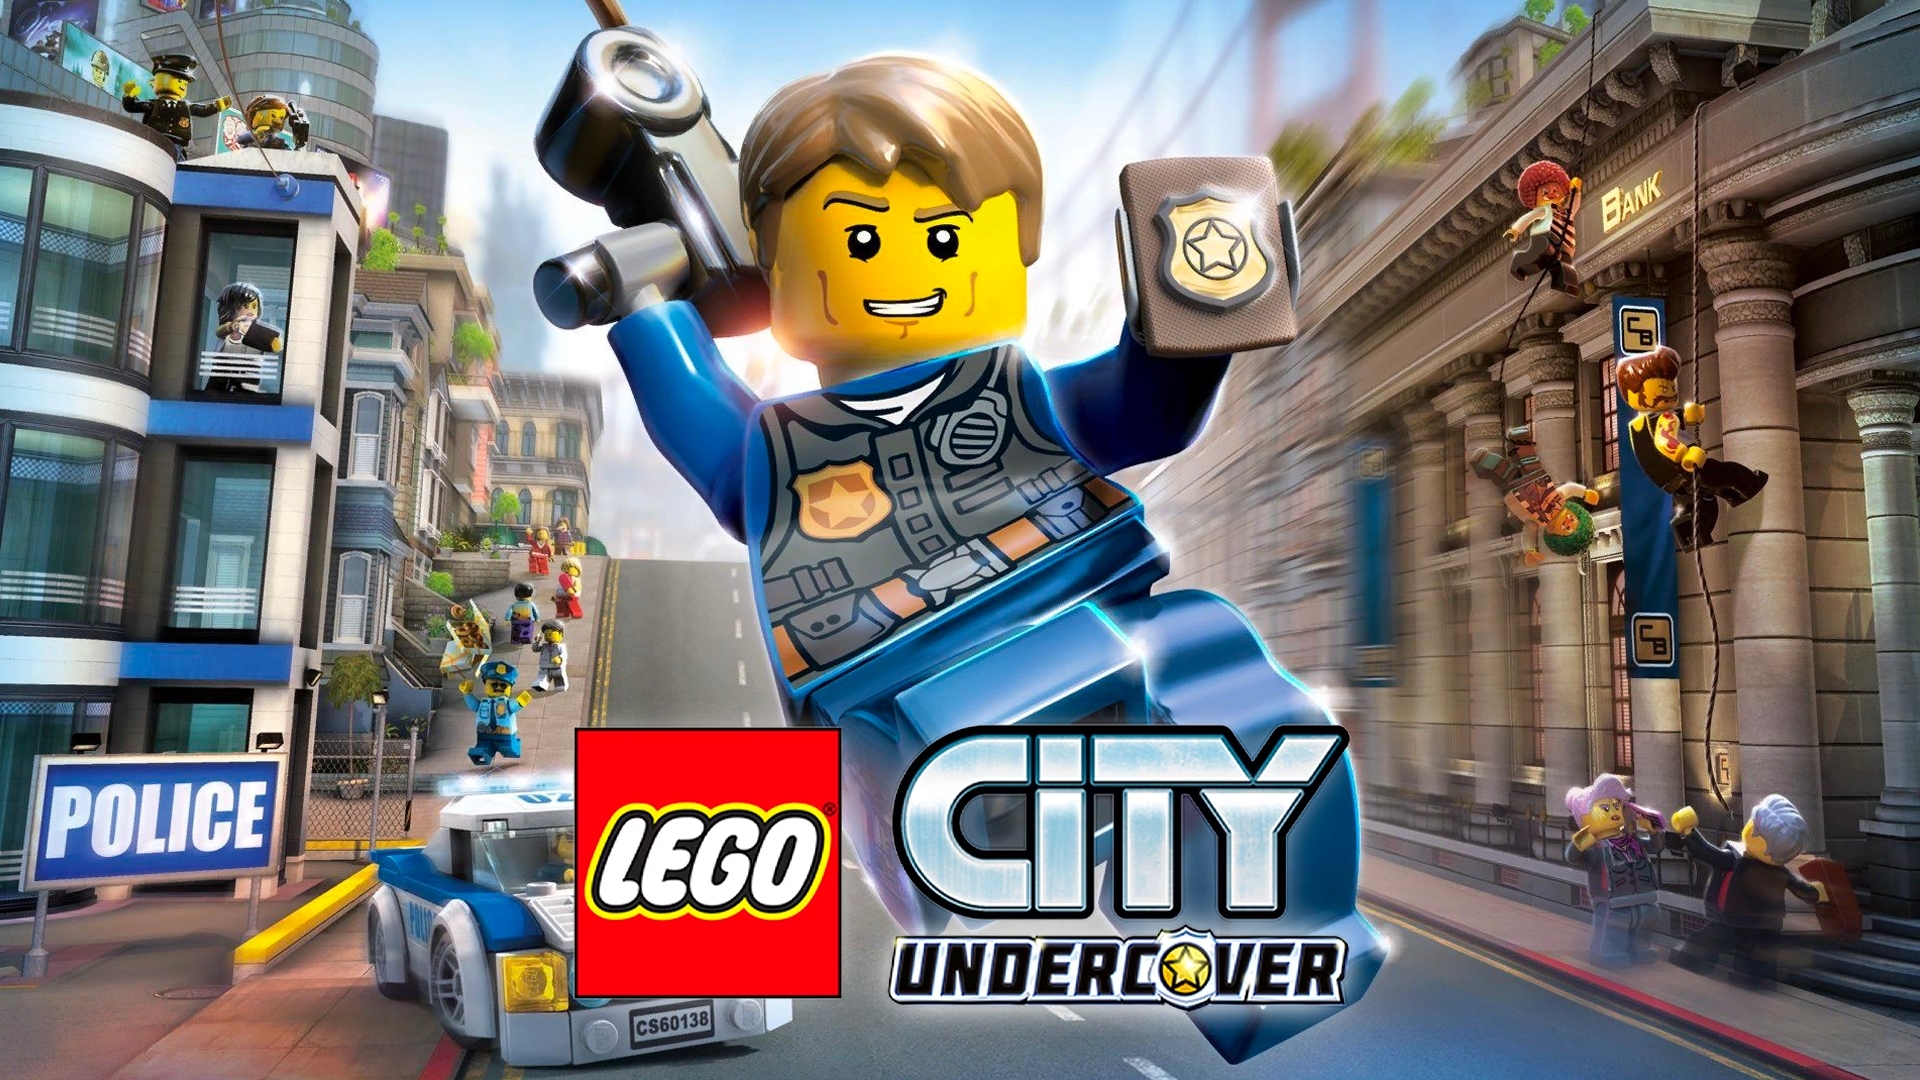 Acheter Lego City: Undercover Steam